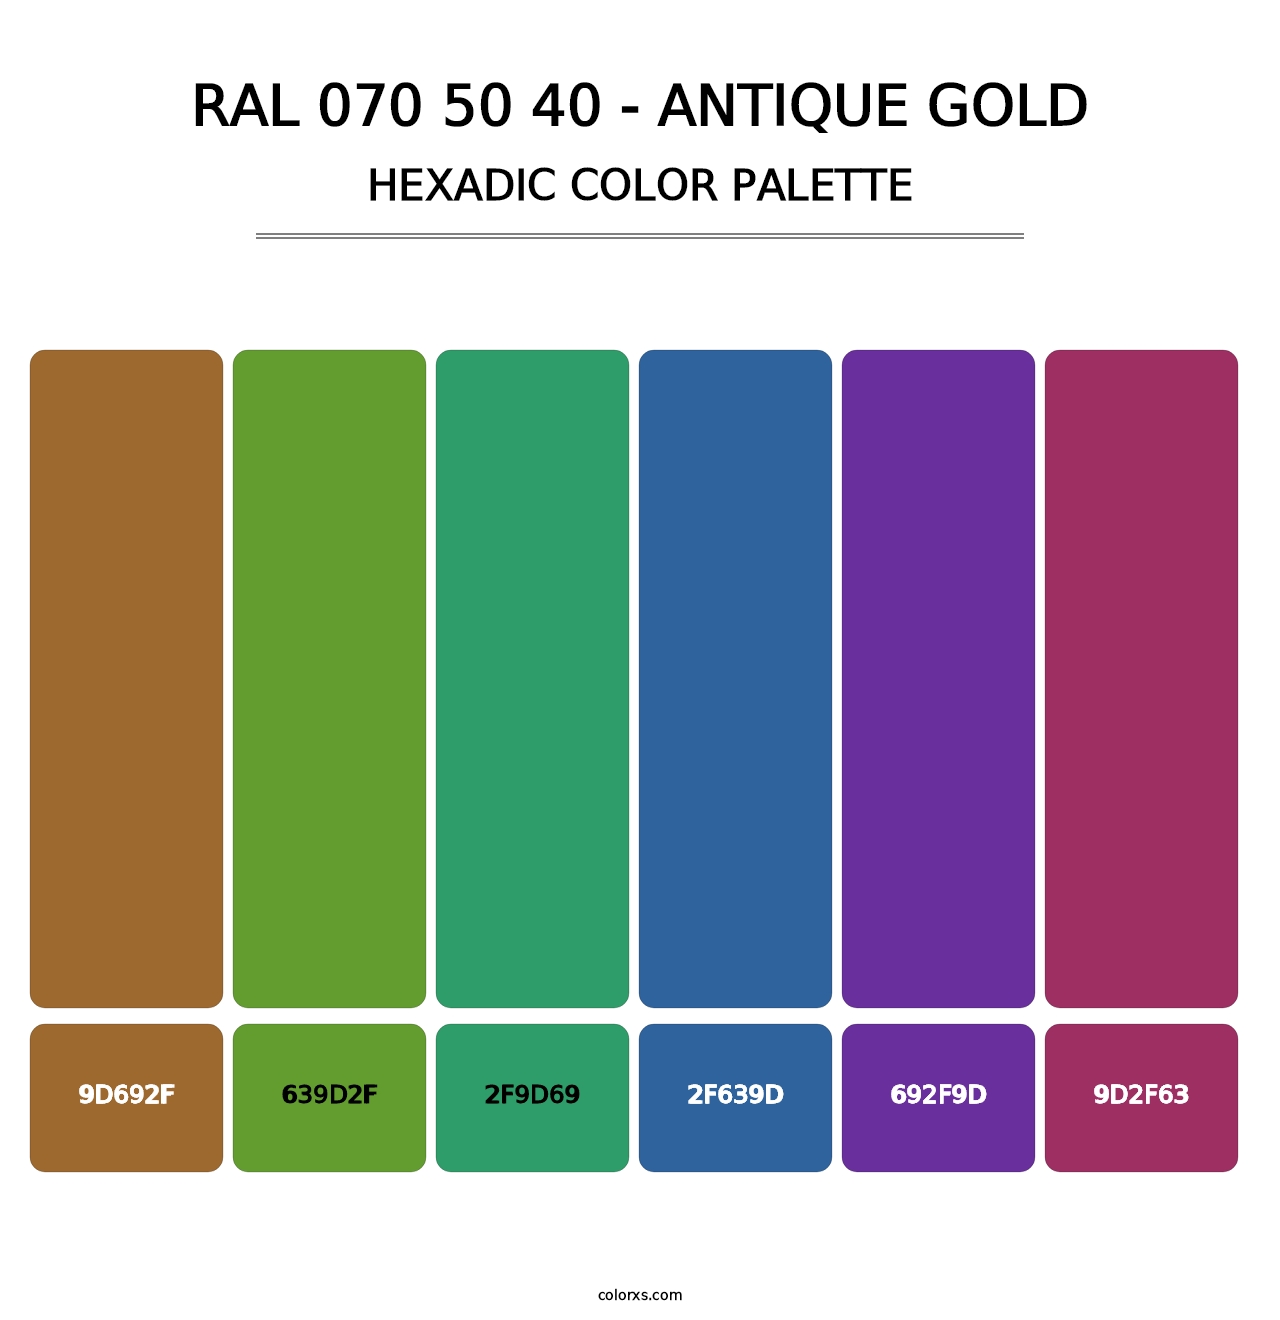 RAL 070 50 40 - Antique Gold - Hexadic Color Palette